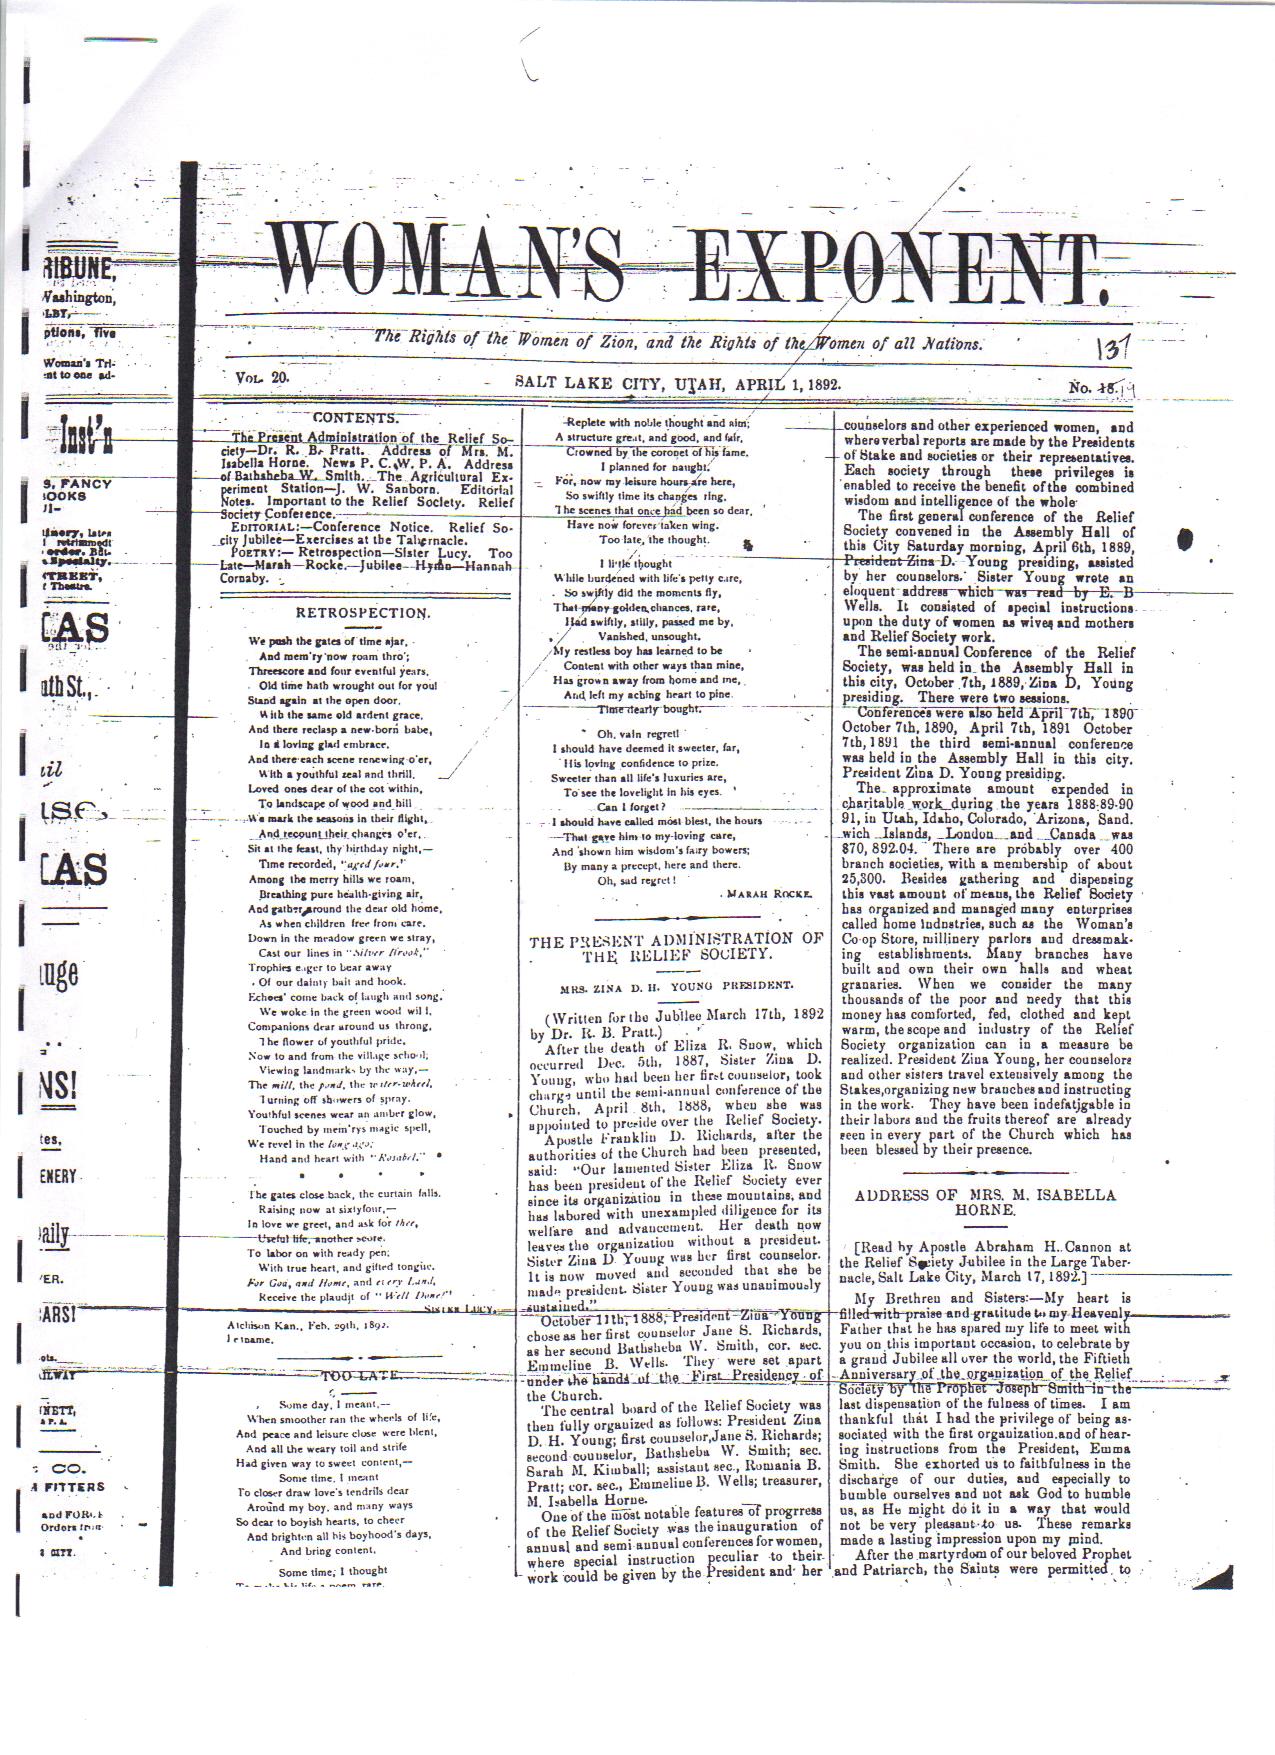 Mormon women's newspaper